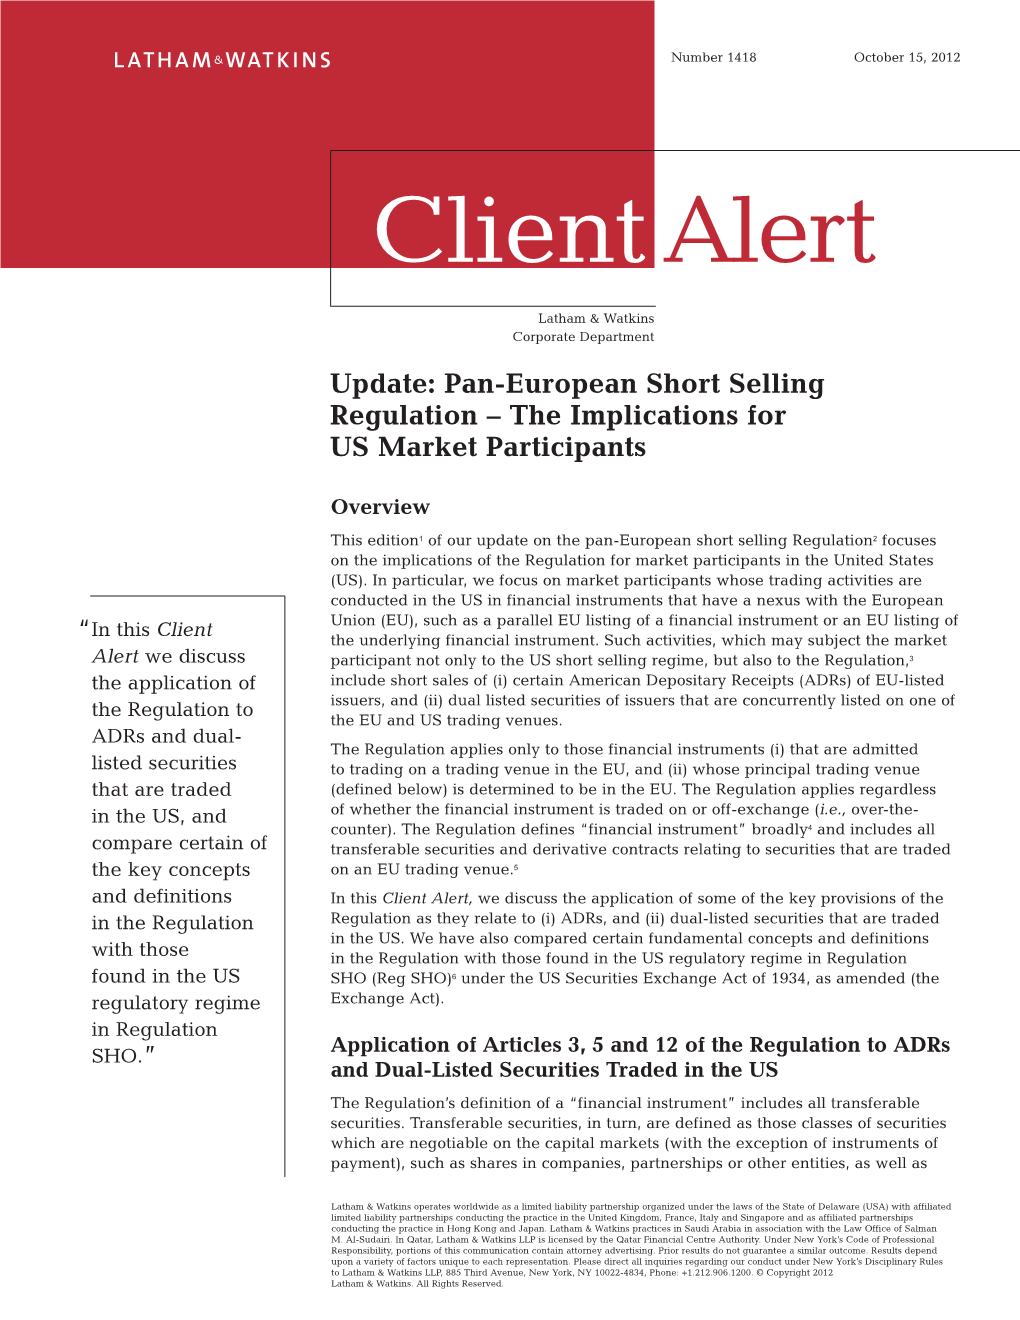 Pan-European Short Selling Regulation – the Implications for US Market Participants